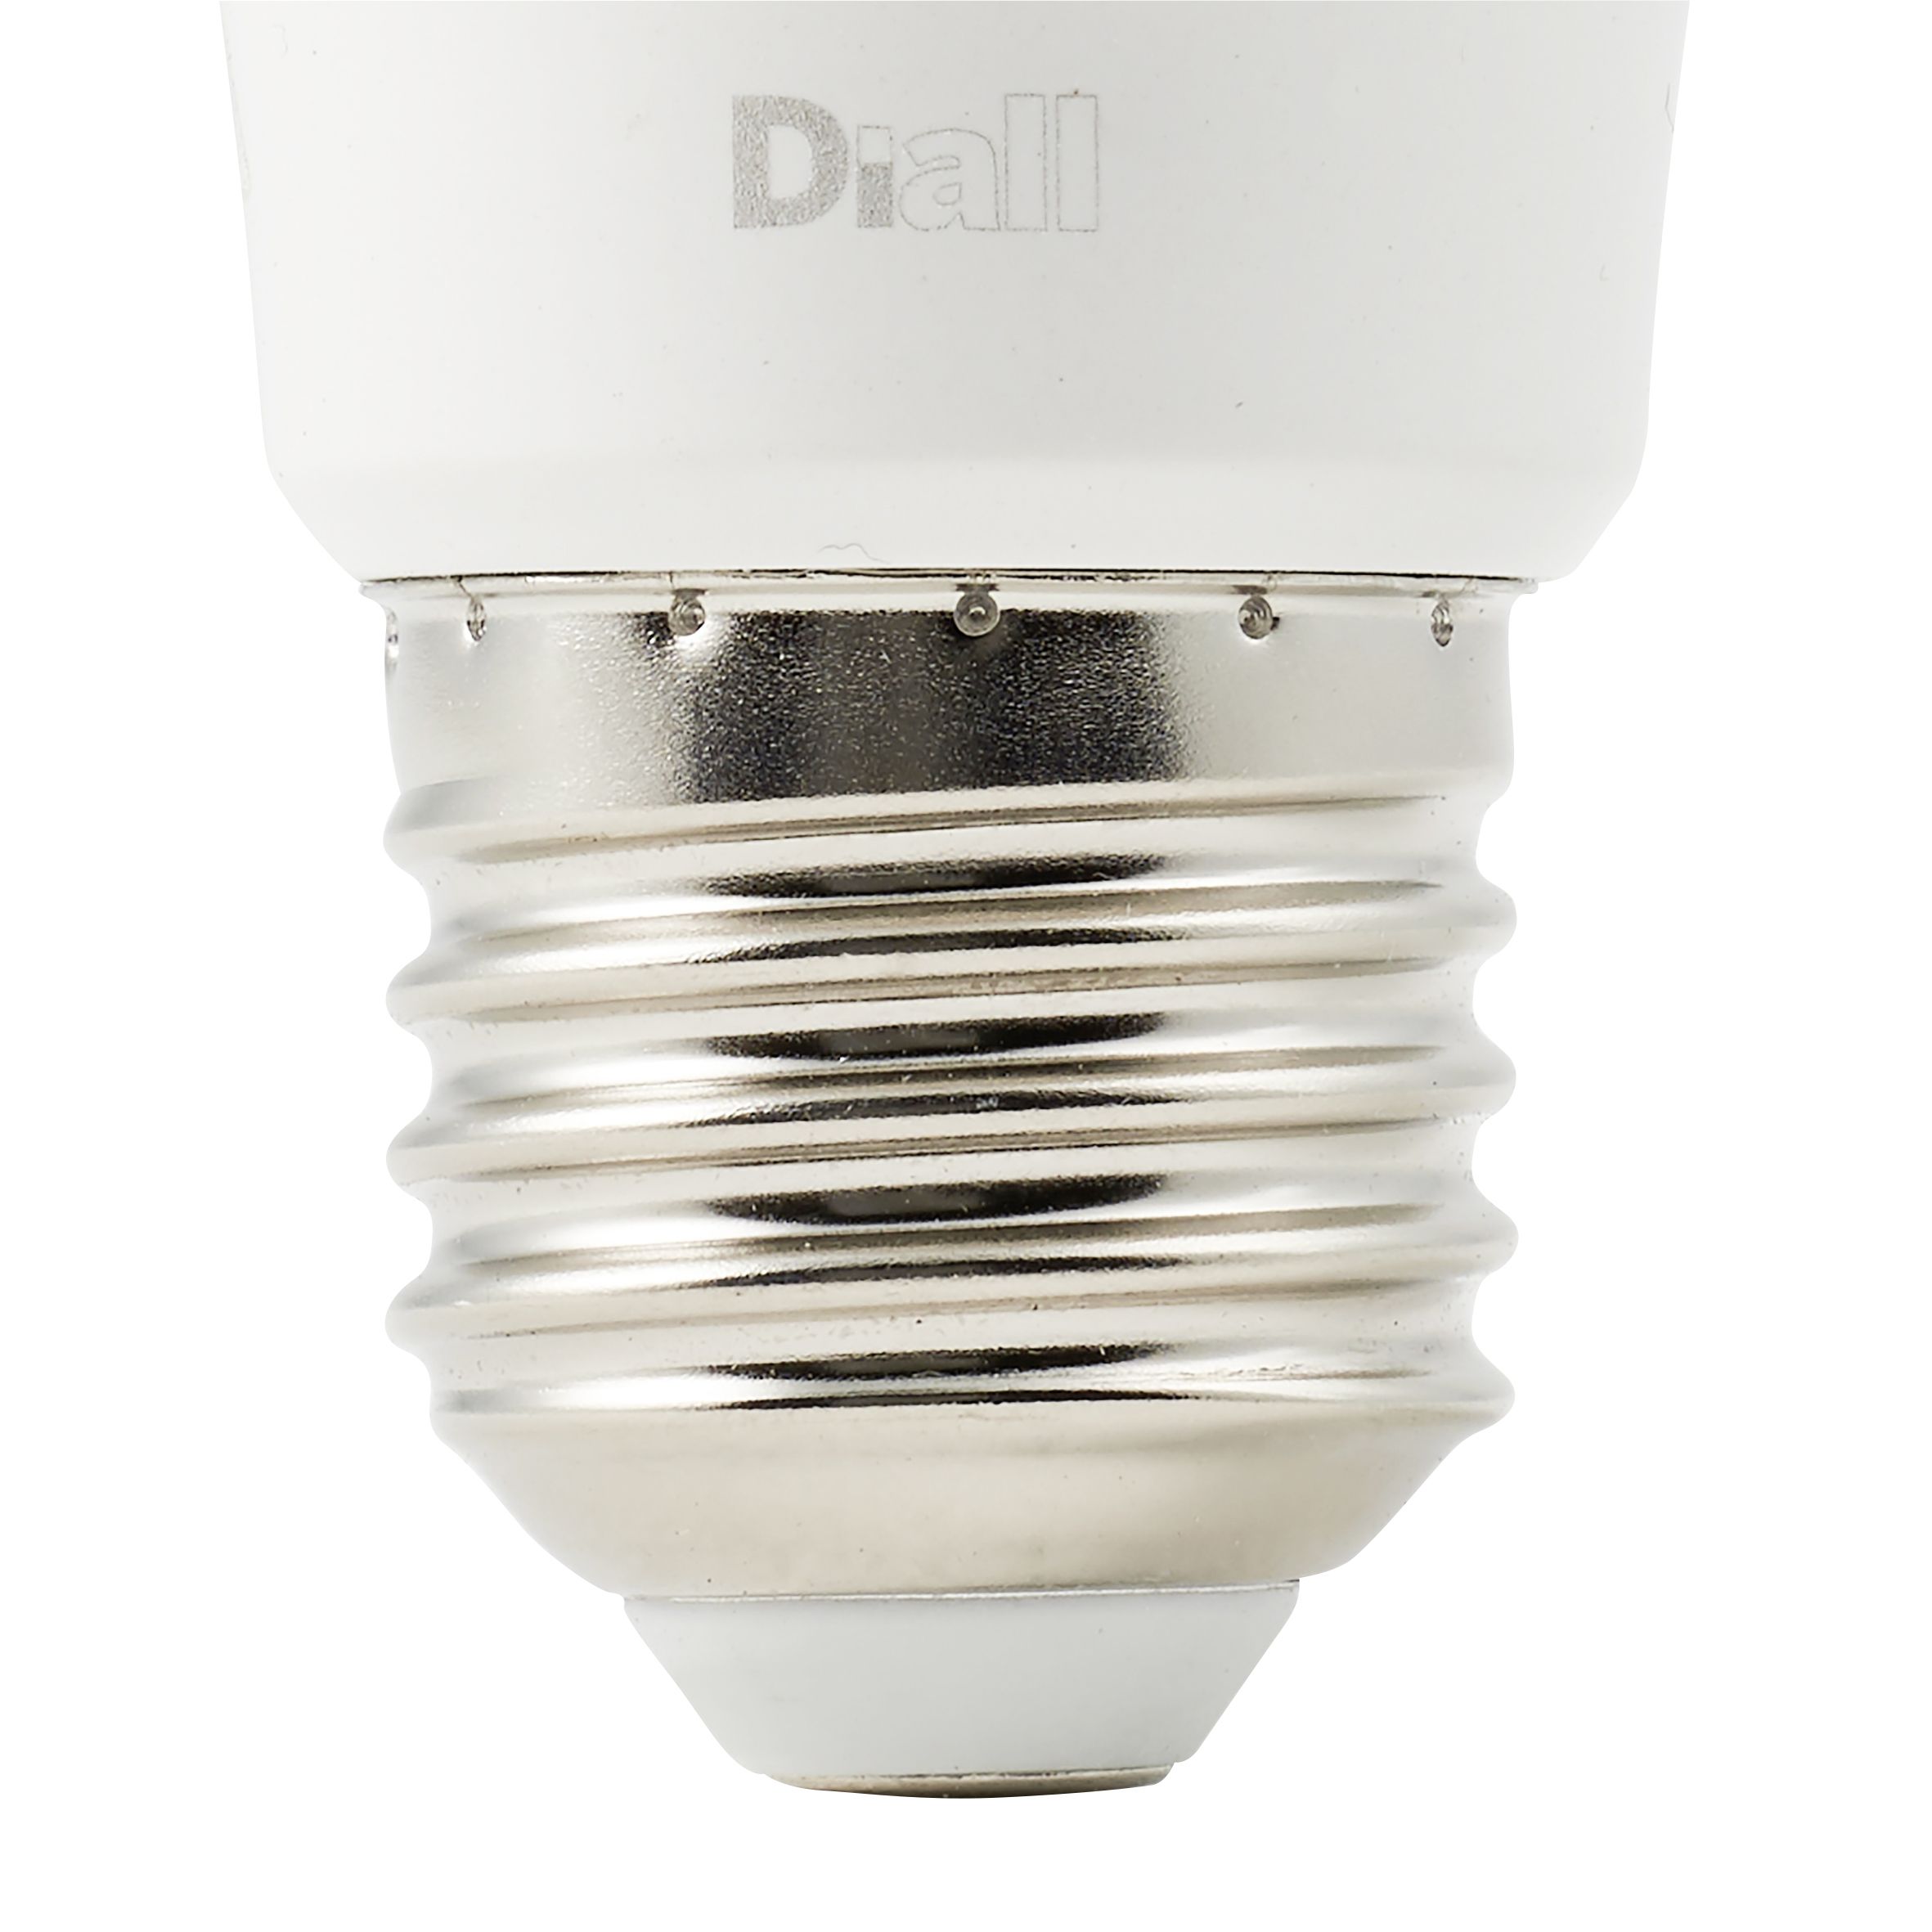 Ampoule LED globe E27 250lm 5W = 25W Ø9.5cm Diall blanc chaud